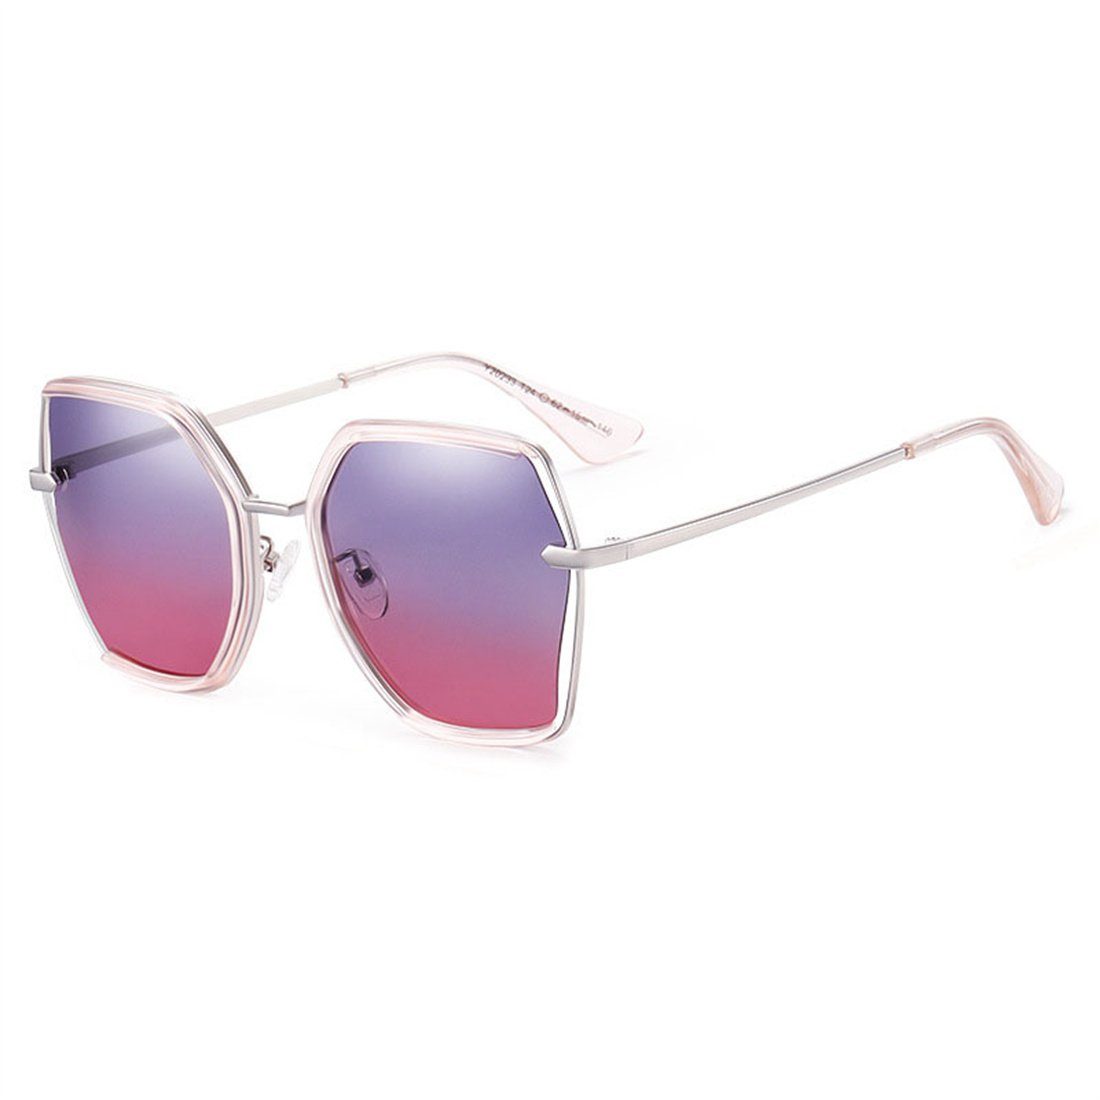 DÖRÖY Sonnenbrille Damen Box polarisierte Sonnenbrille, Mode Sonnenbrille Sonnenschirme Rosa